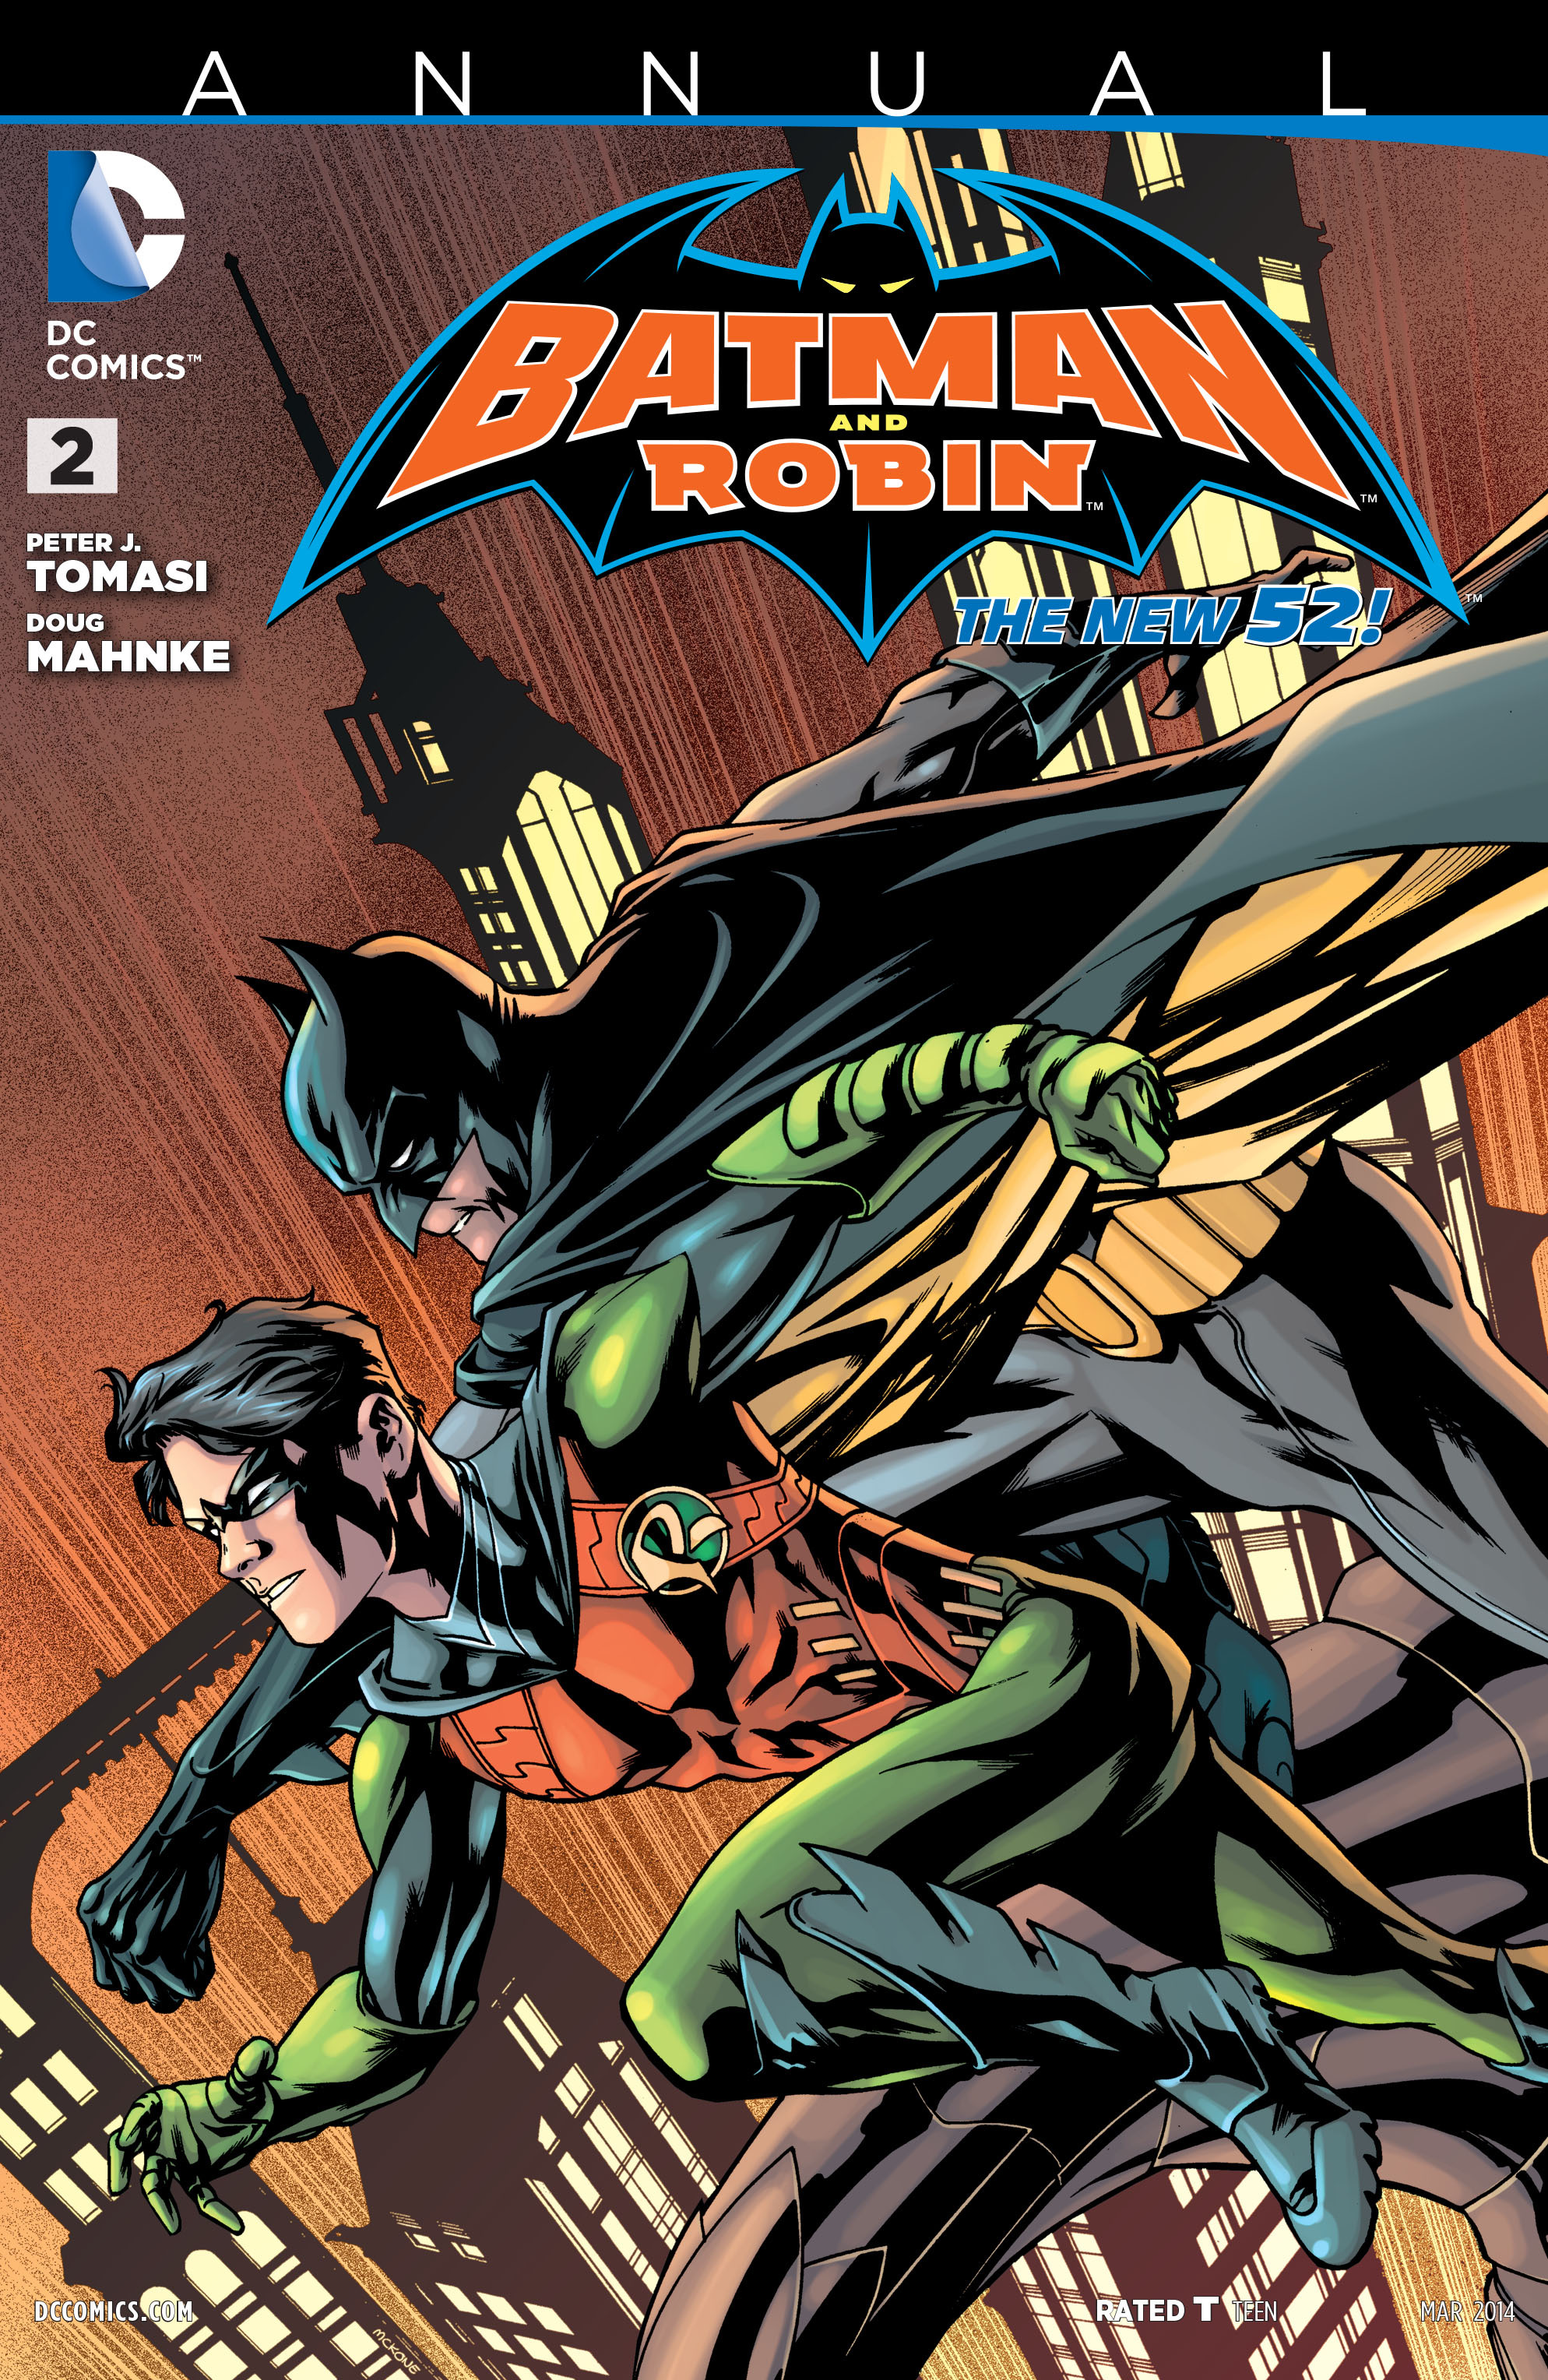 Batman and Robin, Volume 7 by Peter J. Tomasi